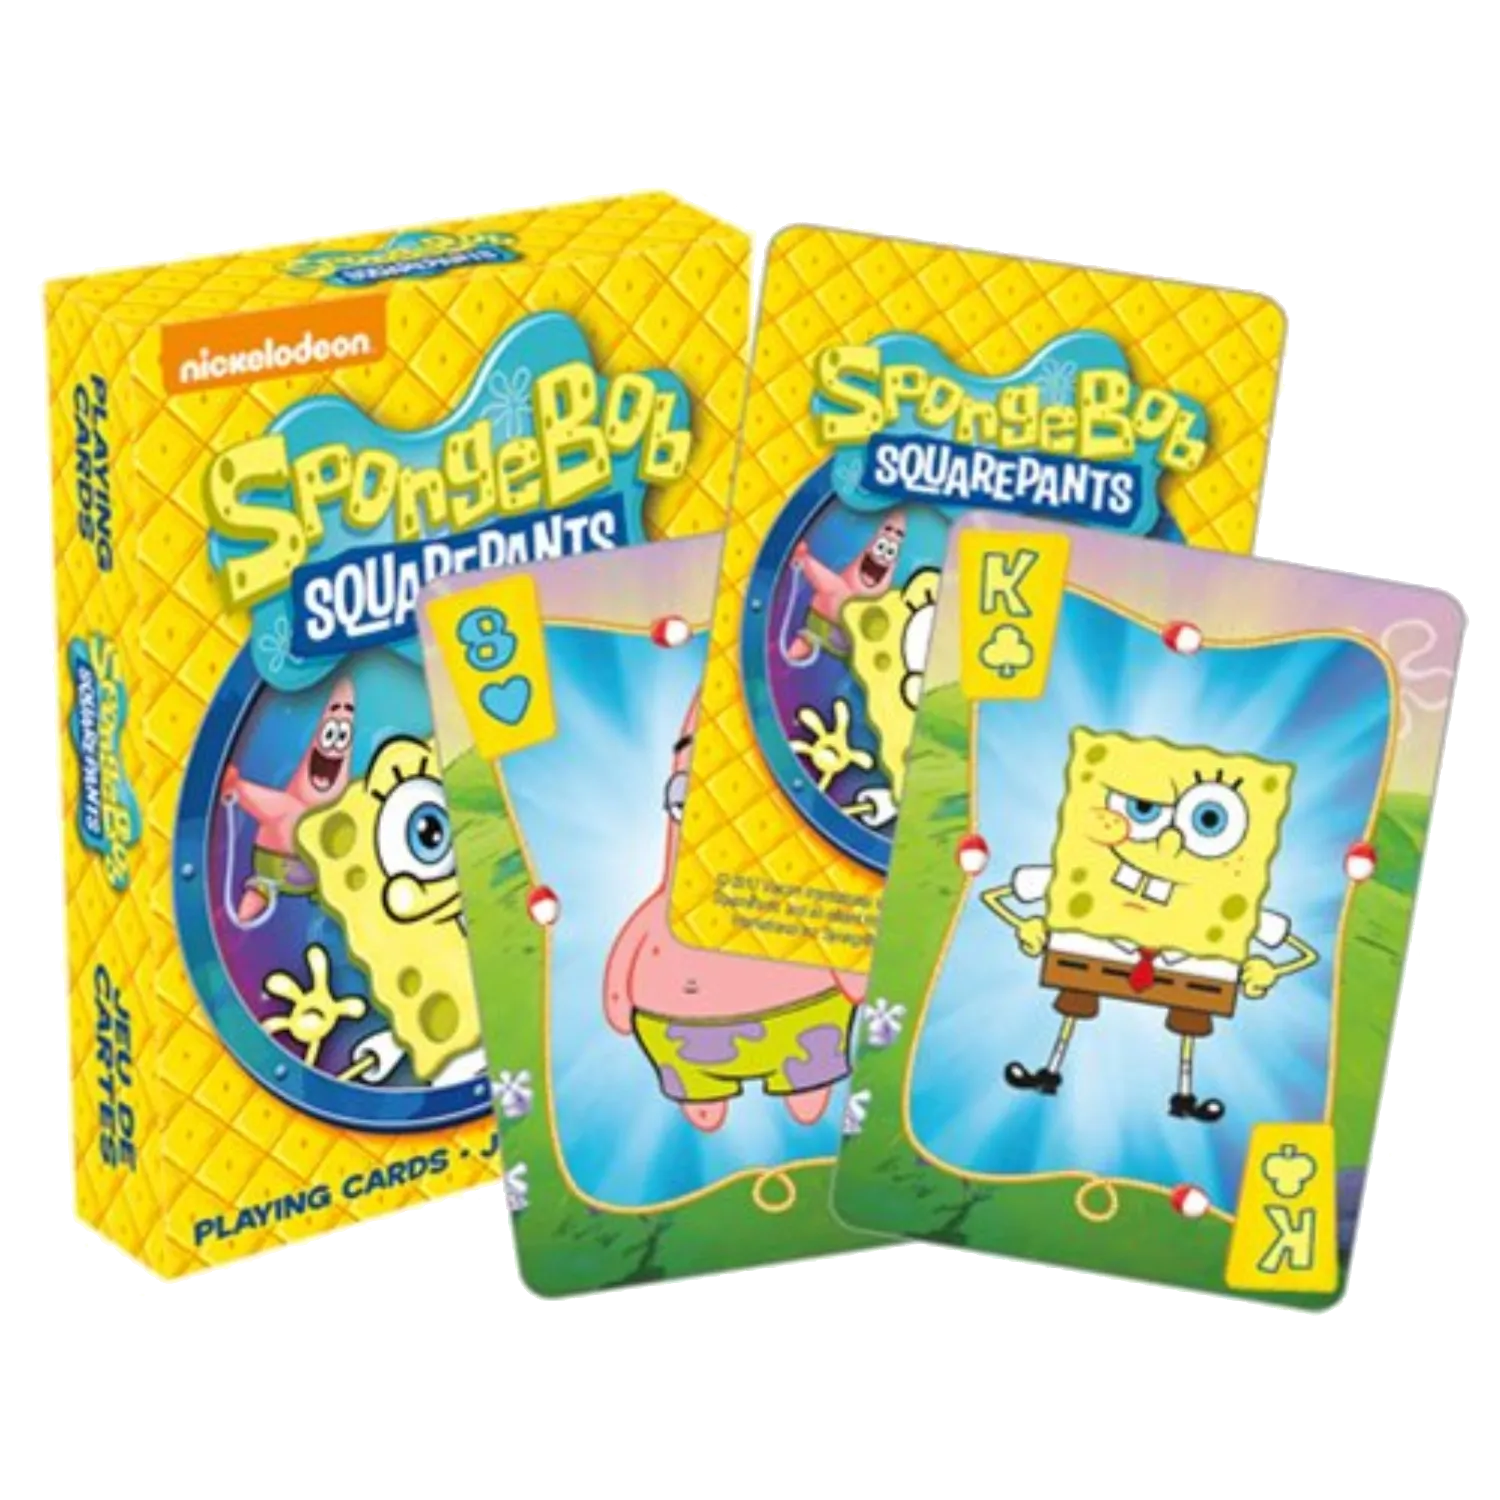 Le carte da gioco di SpongeBob SquarePants